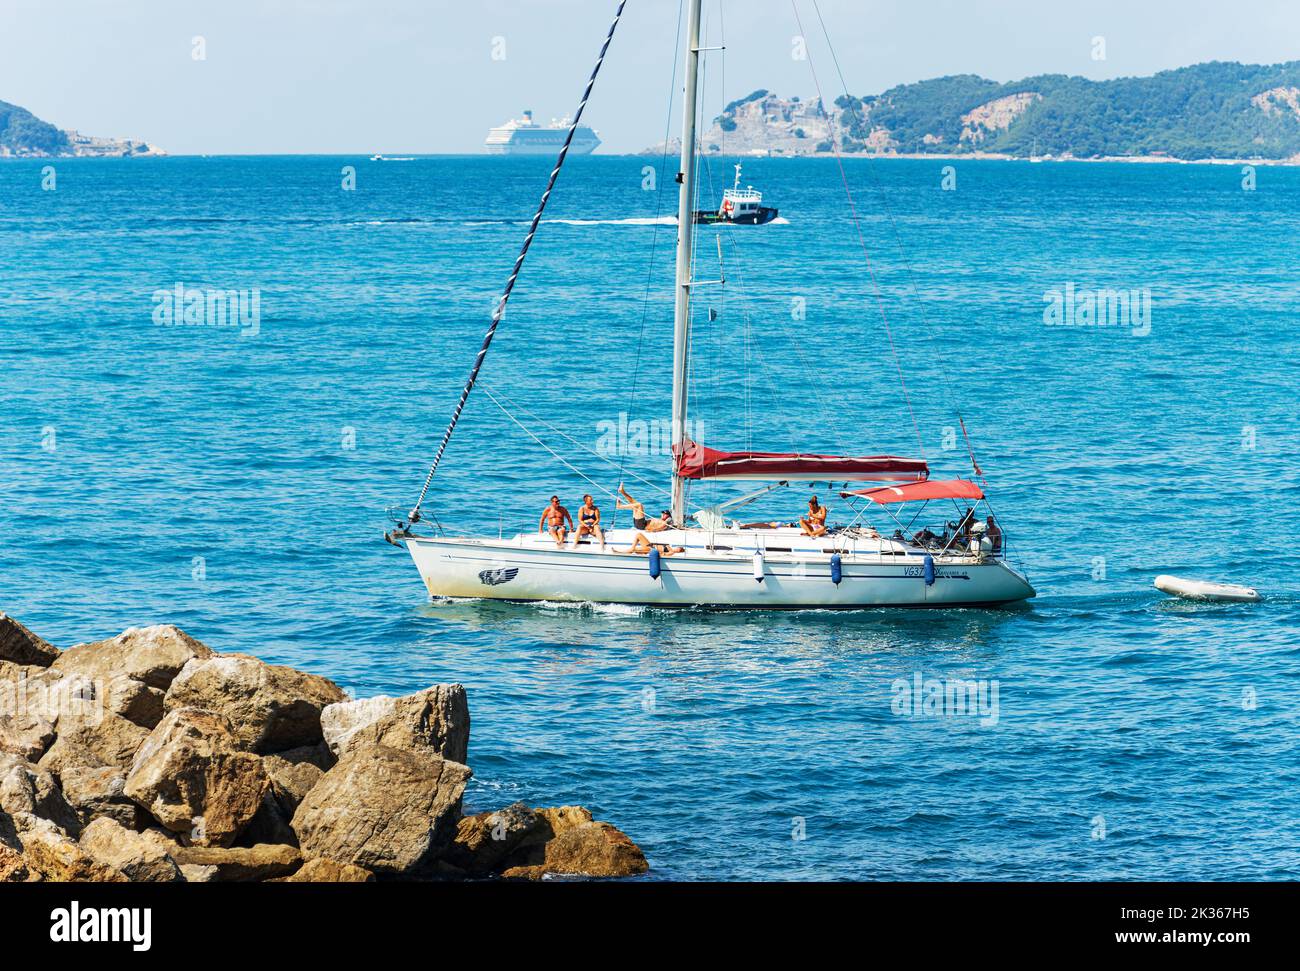 White sailboat with a group of people on board and a cruise ship, Tellaro village, Lerici, Mediterranean Sea, Gulf of La Spezia, Liguria, Italy. Stock Photo